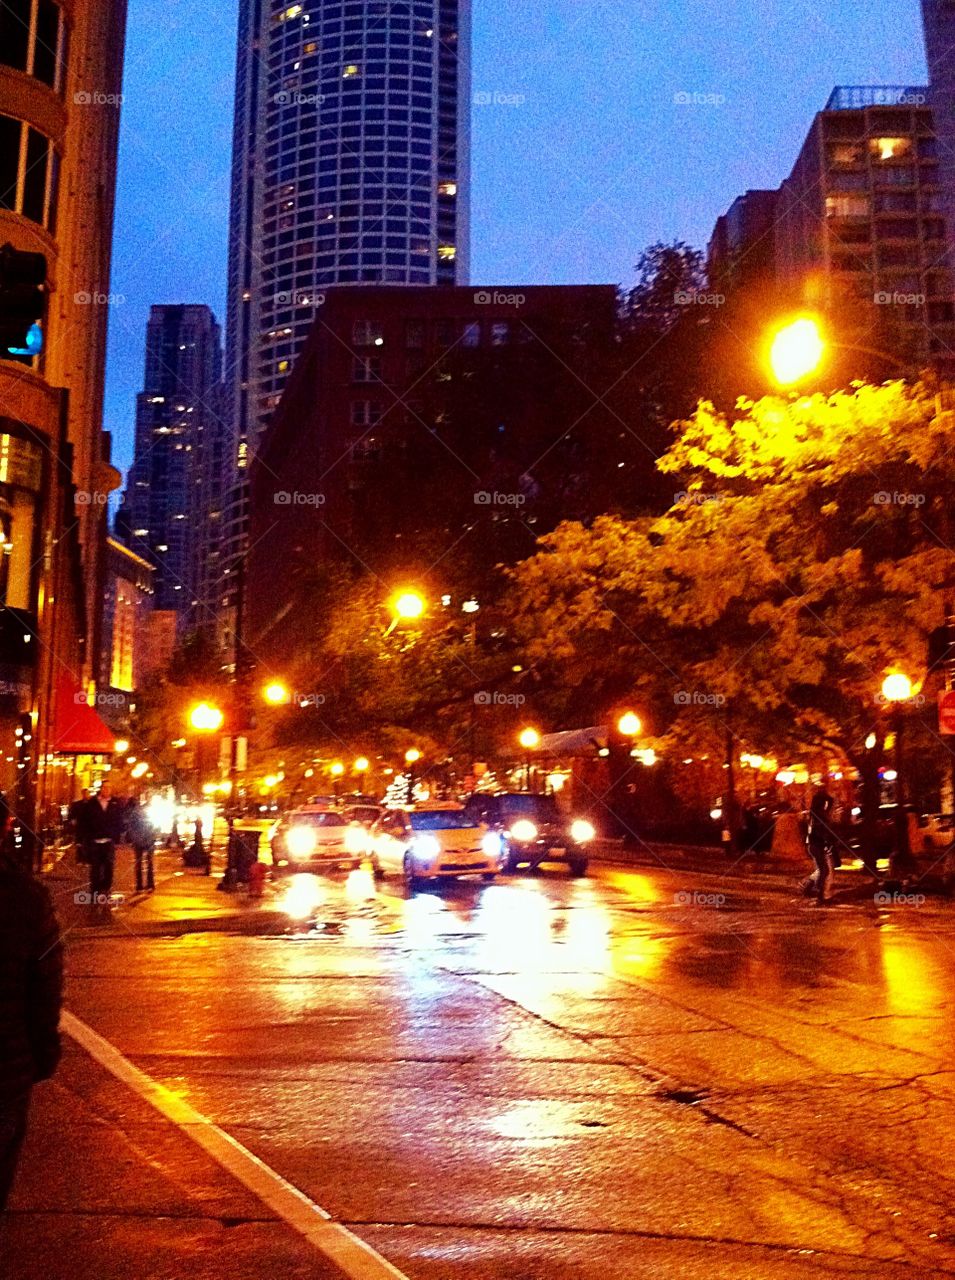 Night rain on a city street 